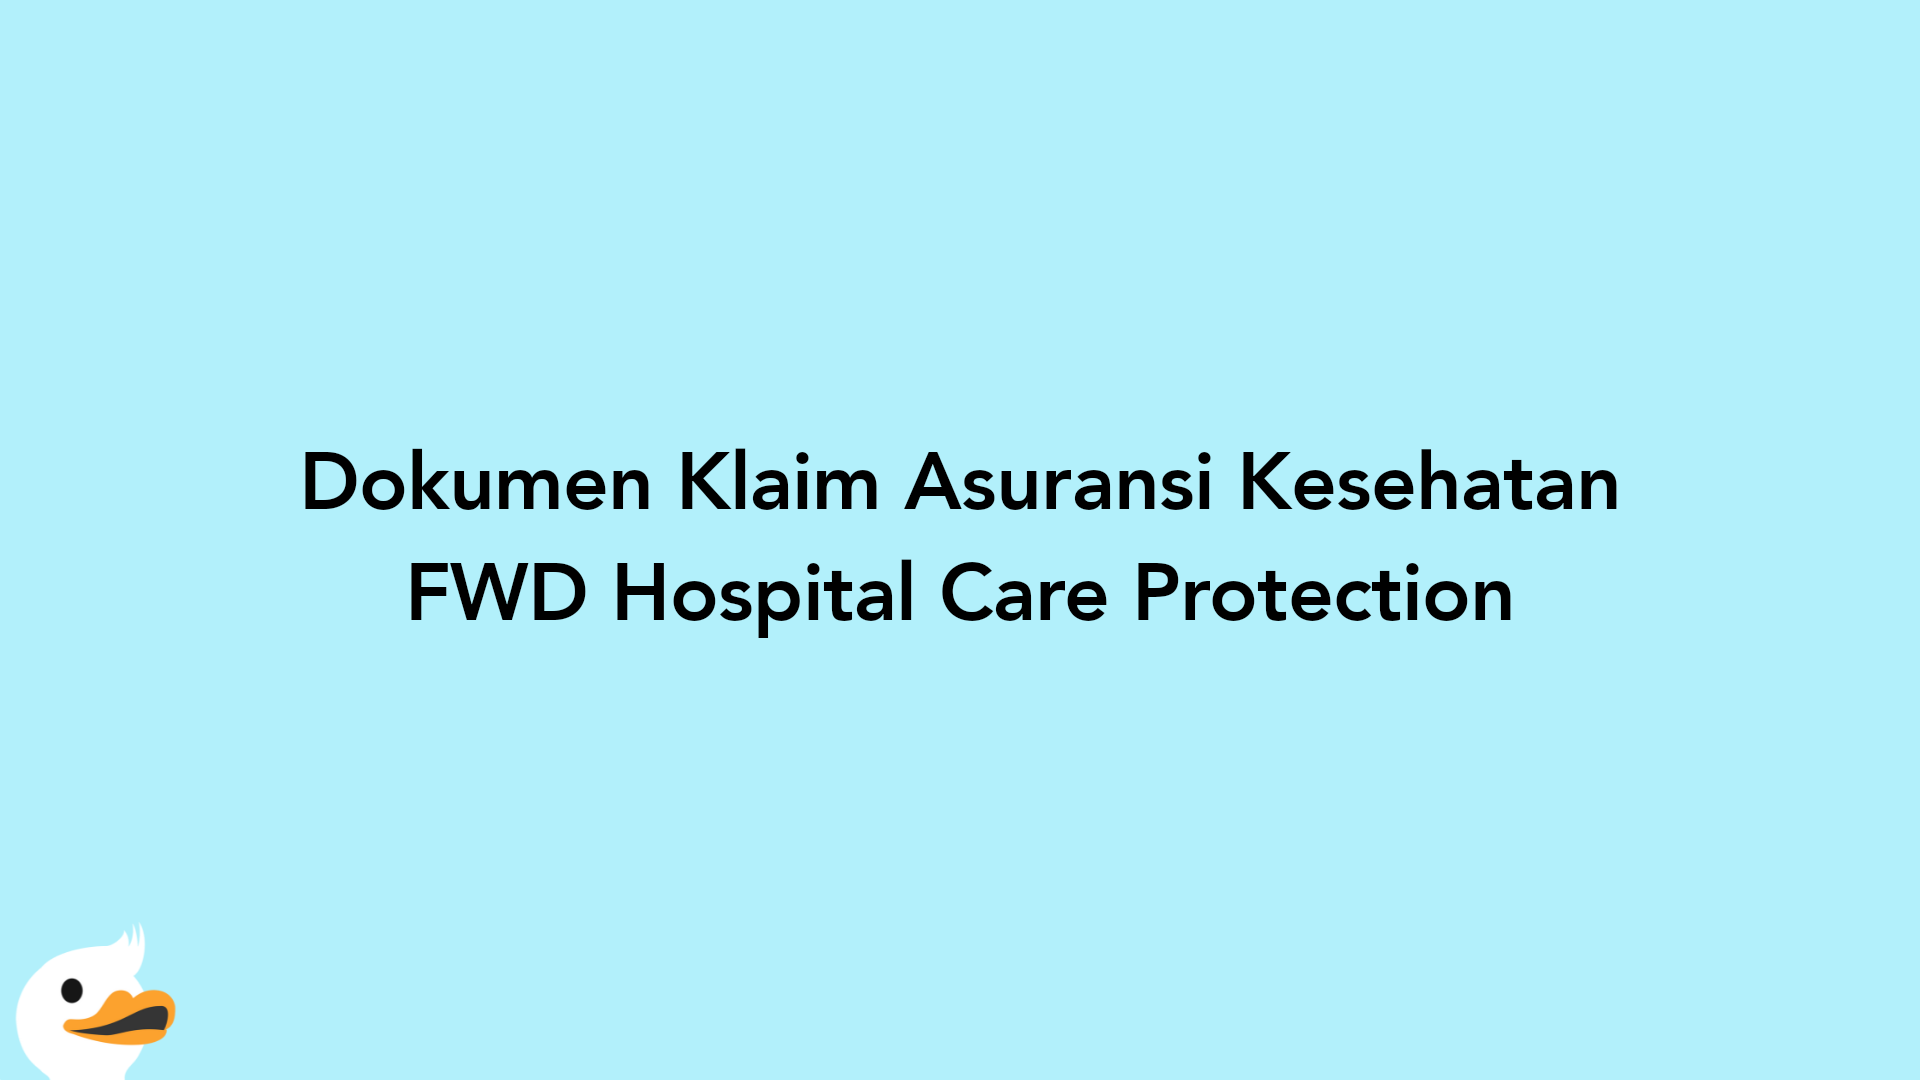 Dokumen Klaim Asuransi Kesehatan FWD Hospital Care Protection